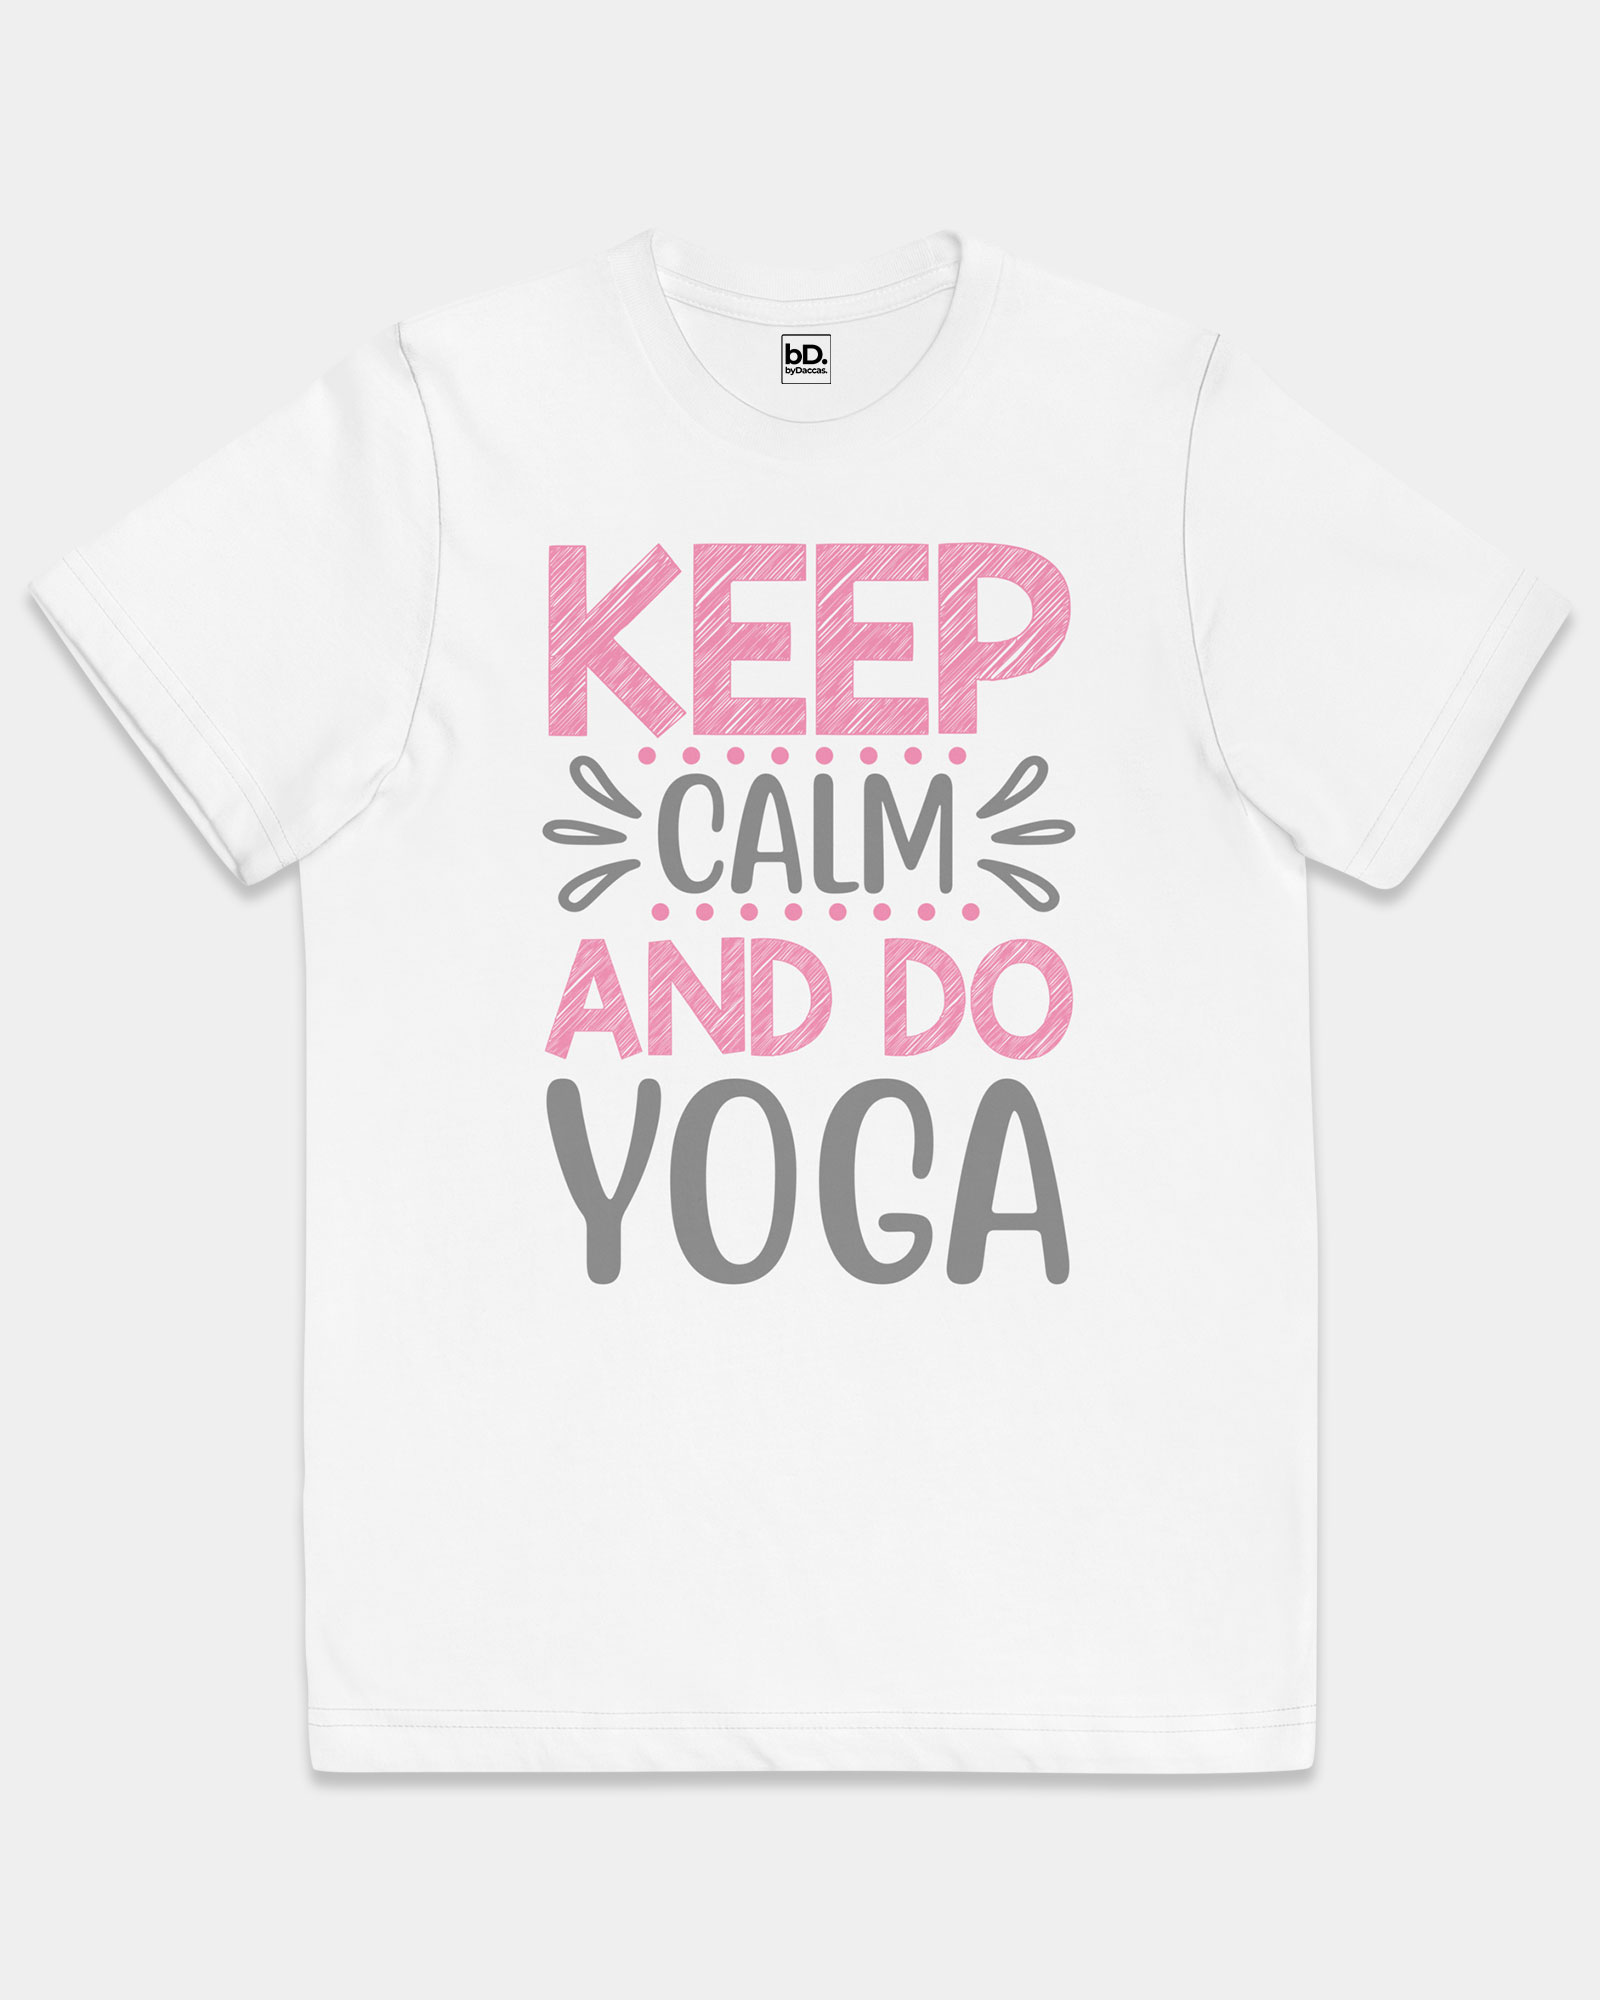 Keep calm and do yoga tshirt